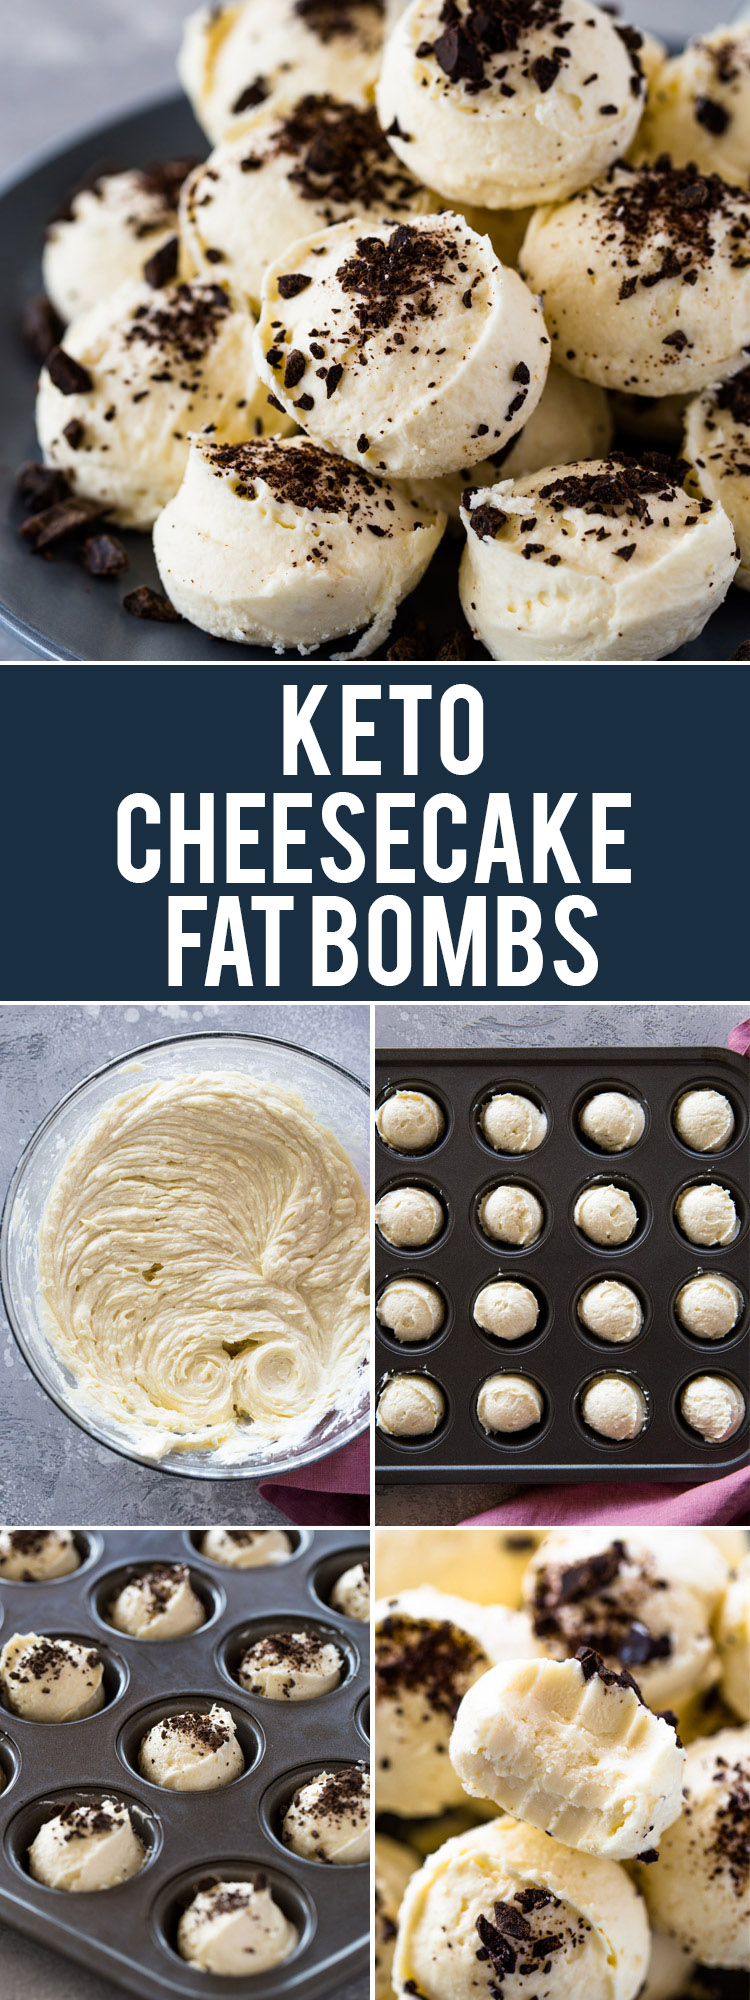 Keto Cheesecake Fat Bombs | Gimme Delicious